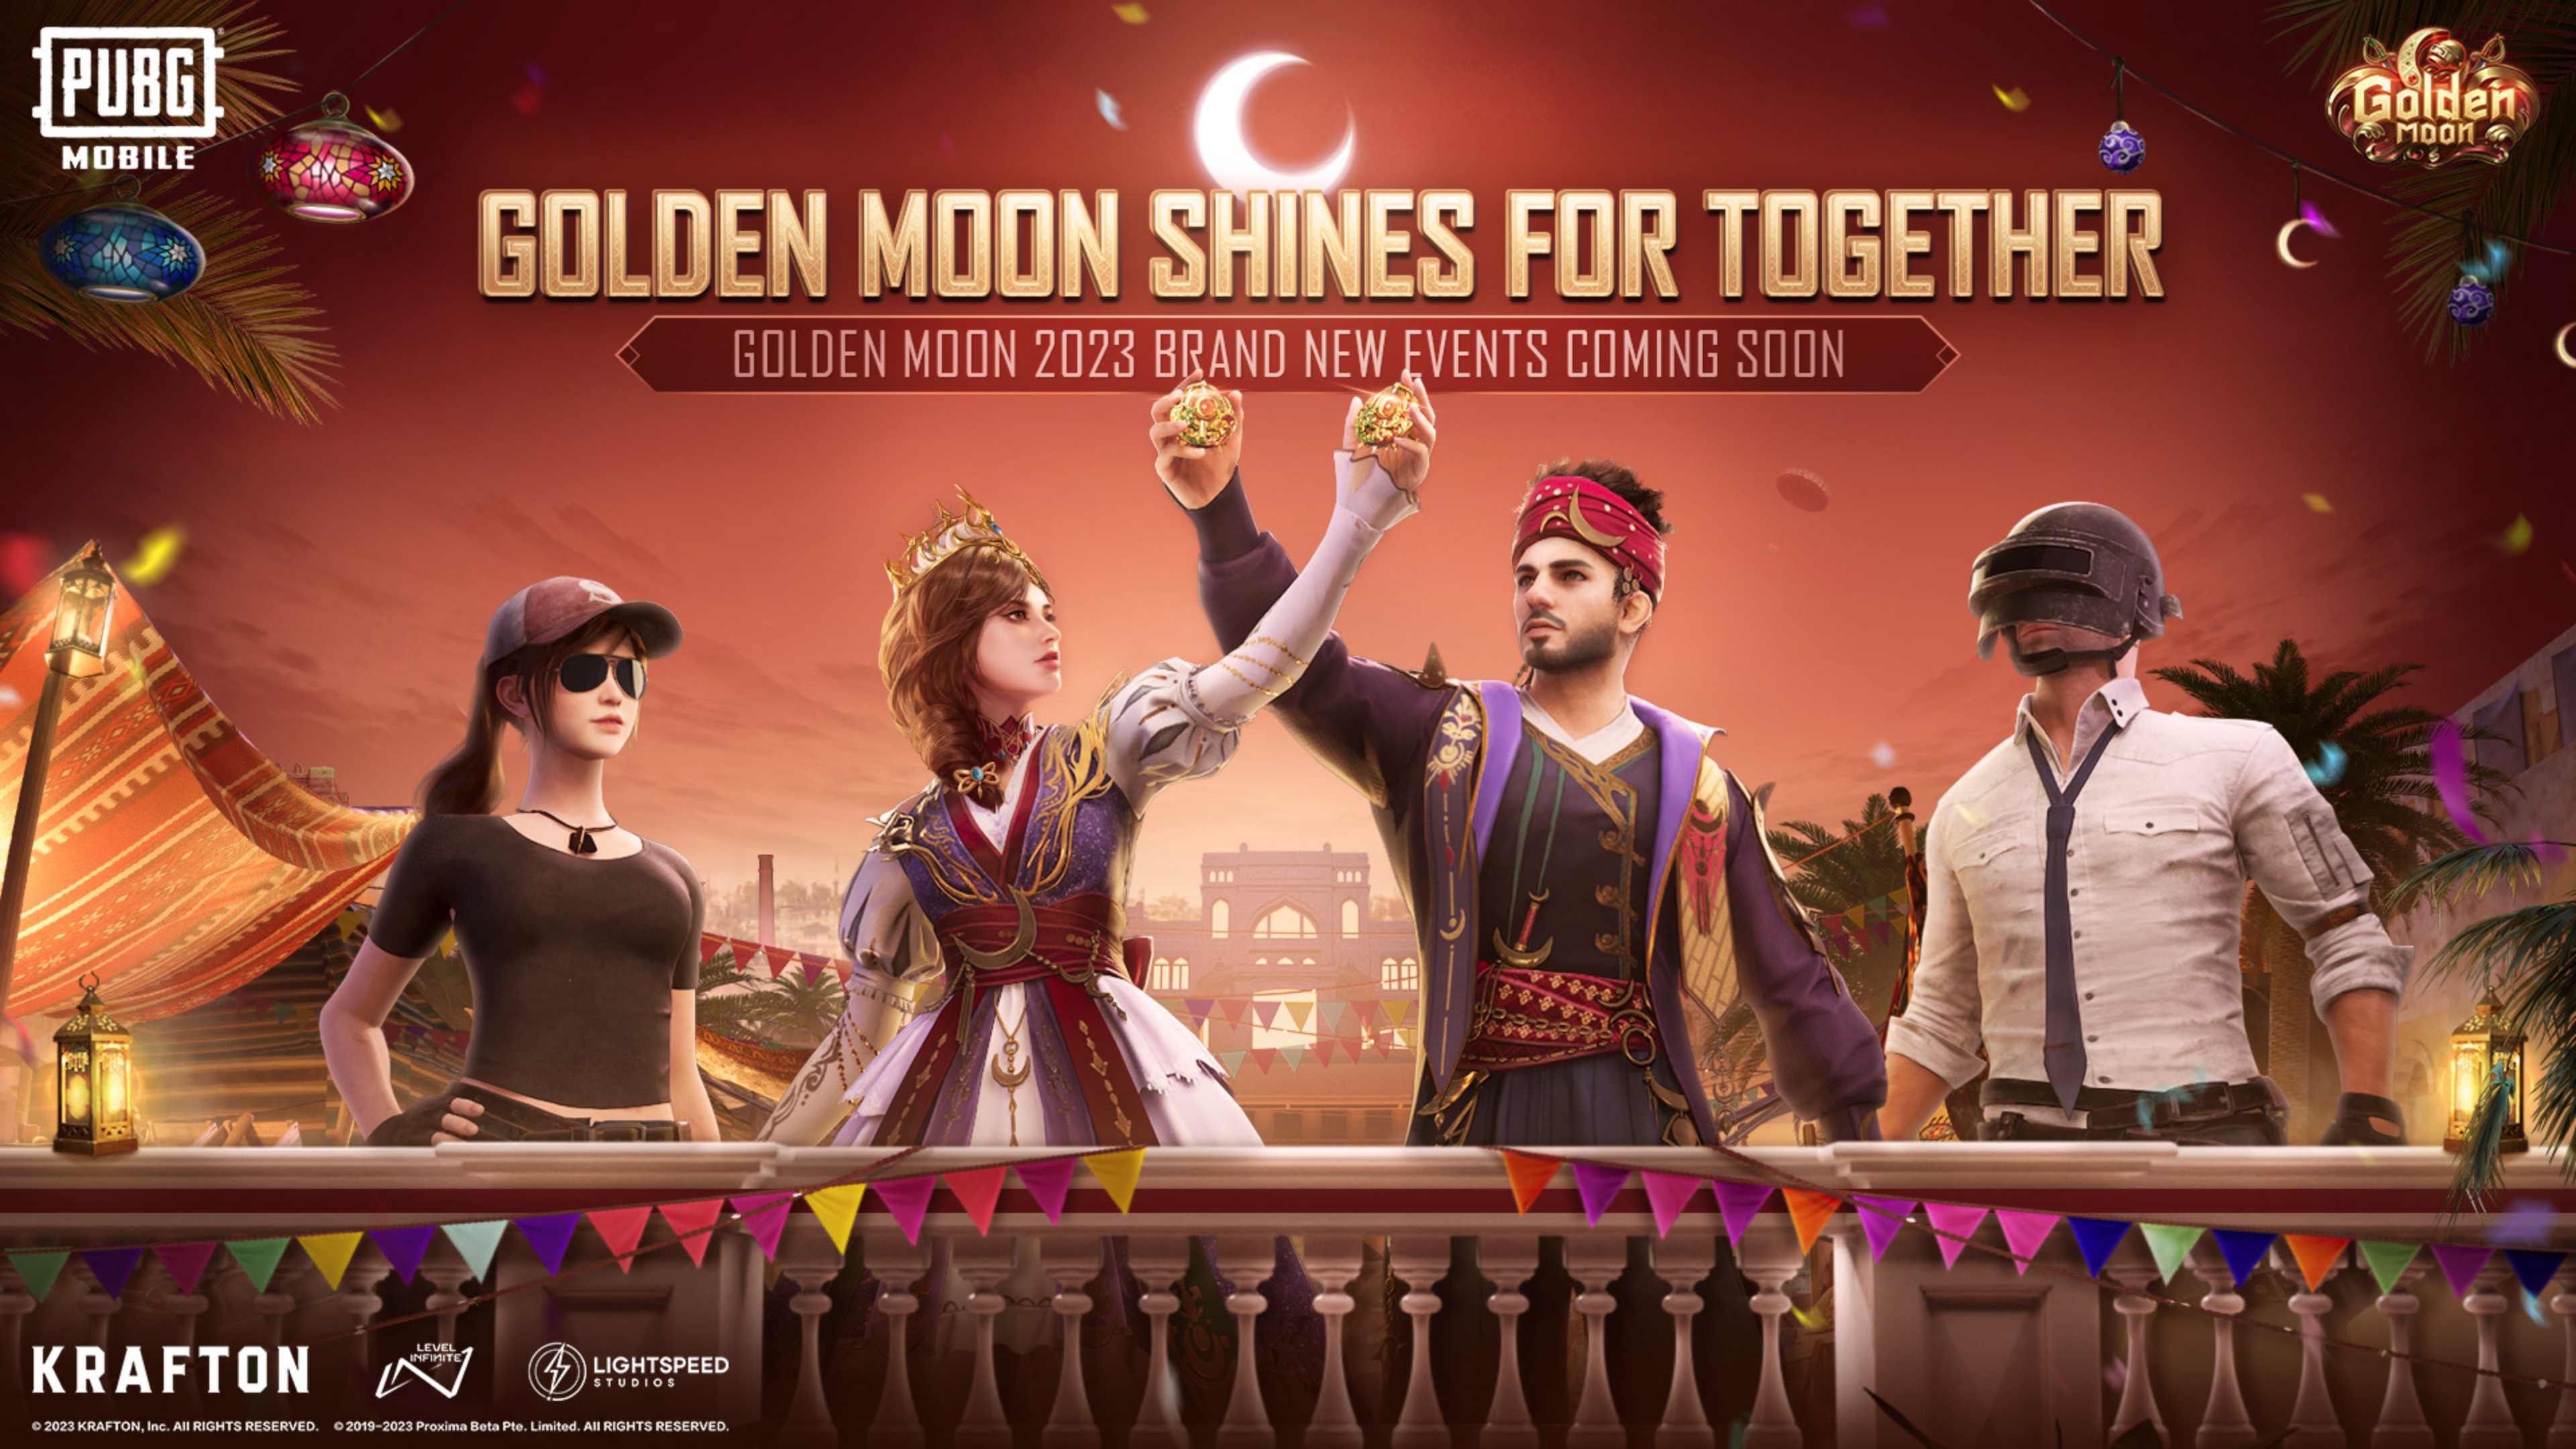 PUBG MOBILE Celebrates Ramadan With Golden Moon: The Tides